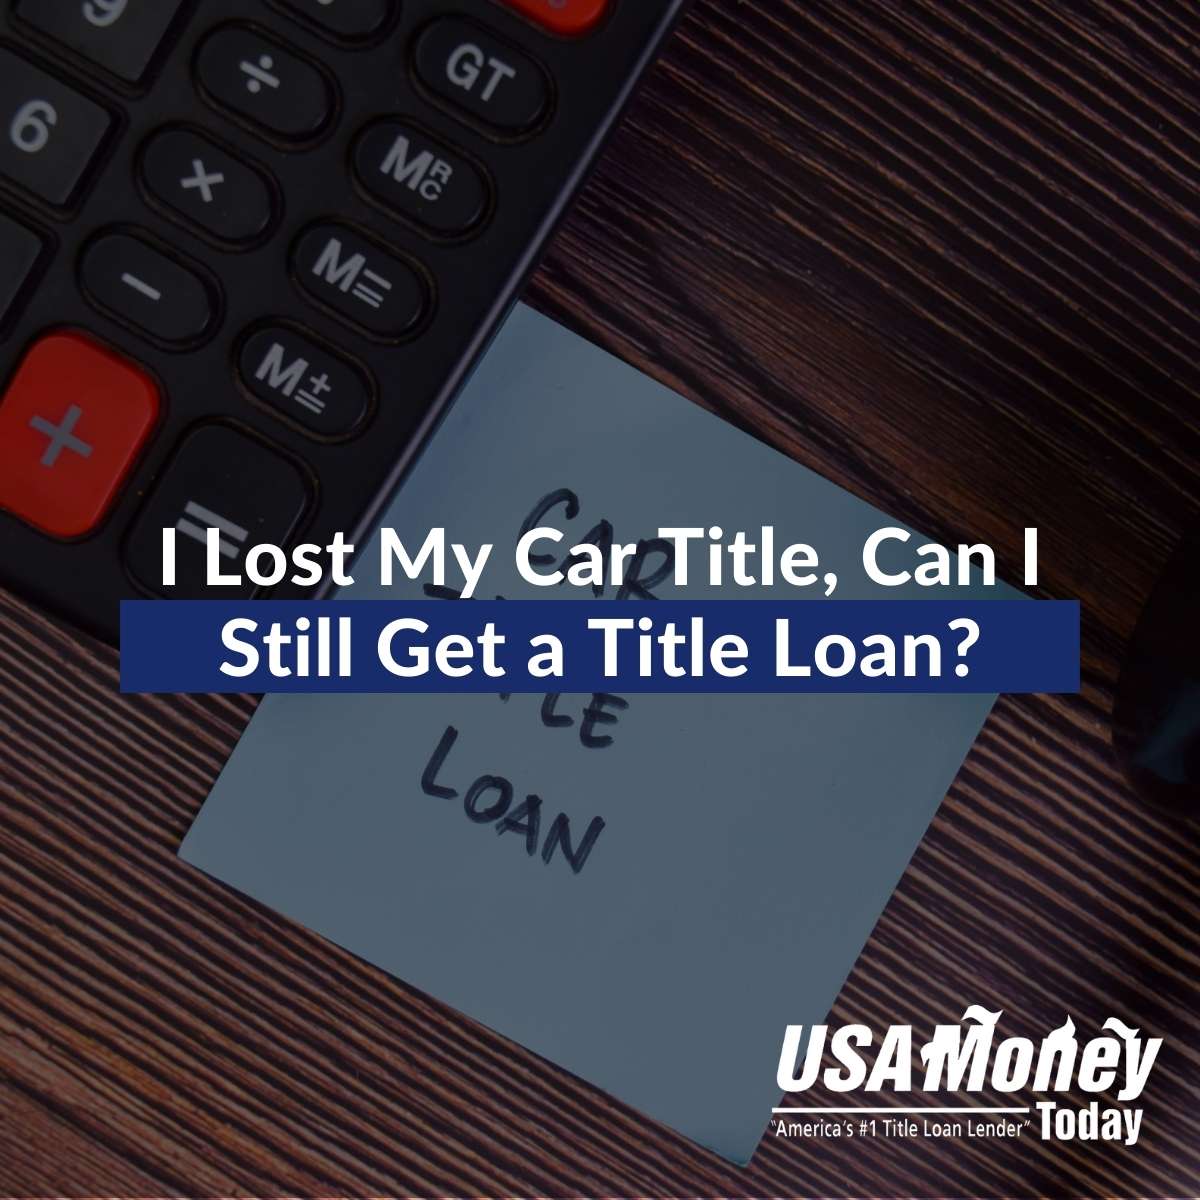 I Lost My Car Title, Can I Still Get a Title Loan